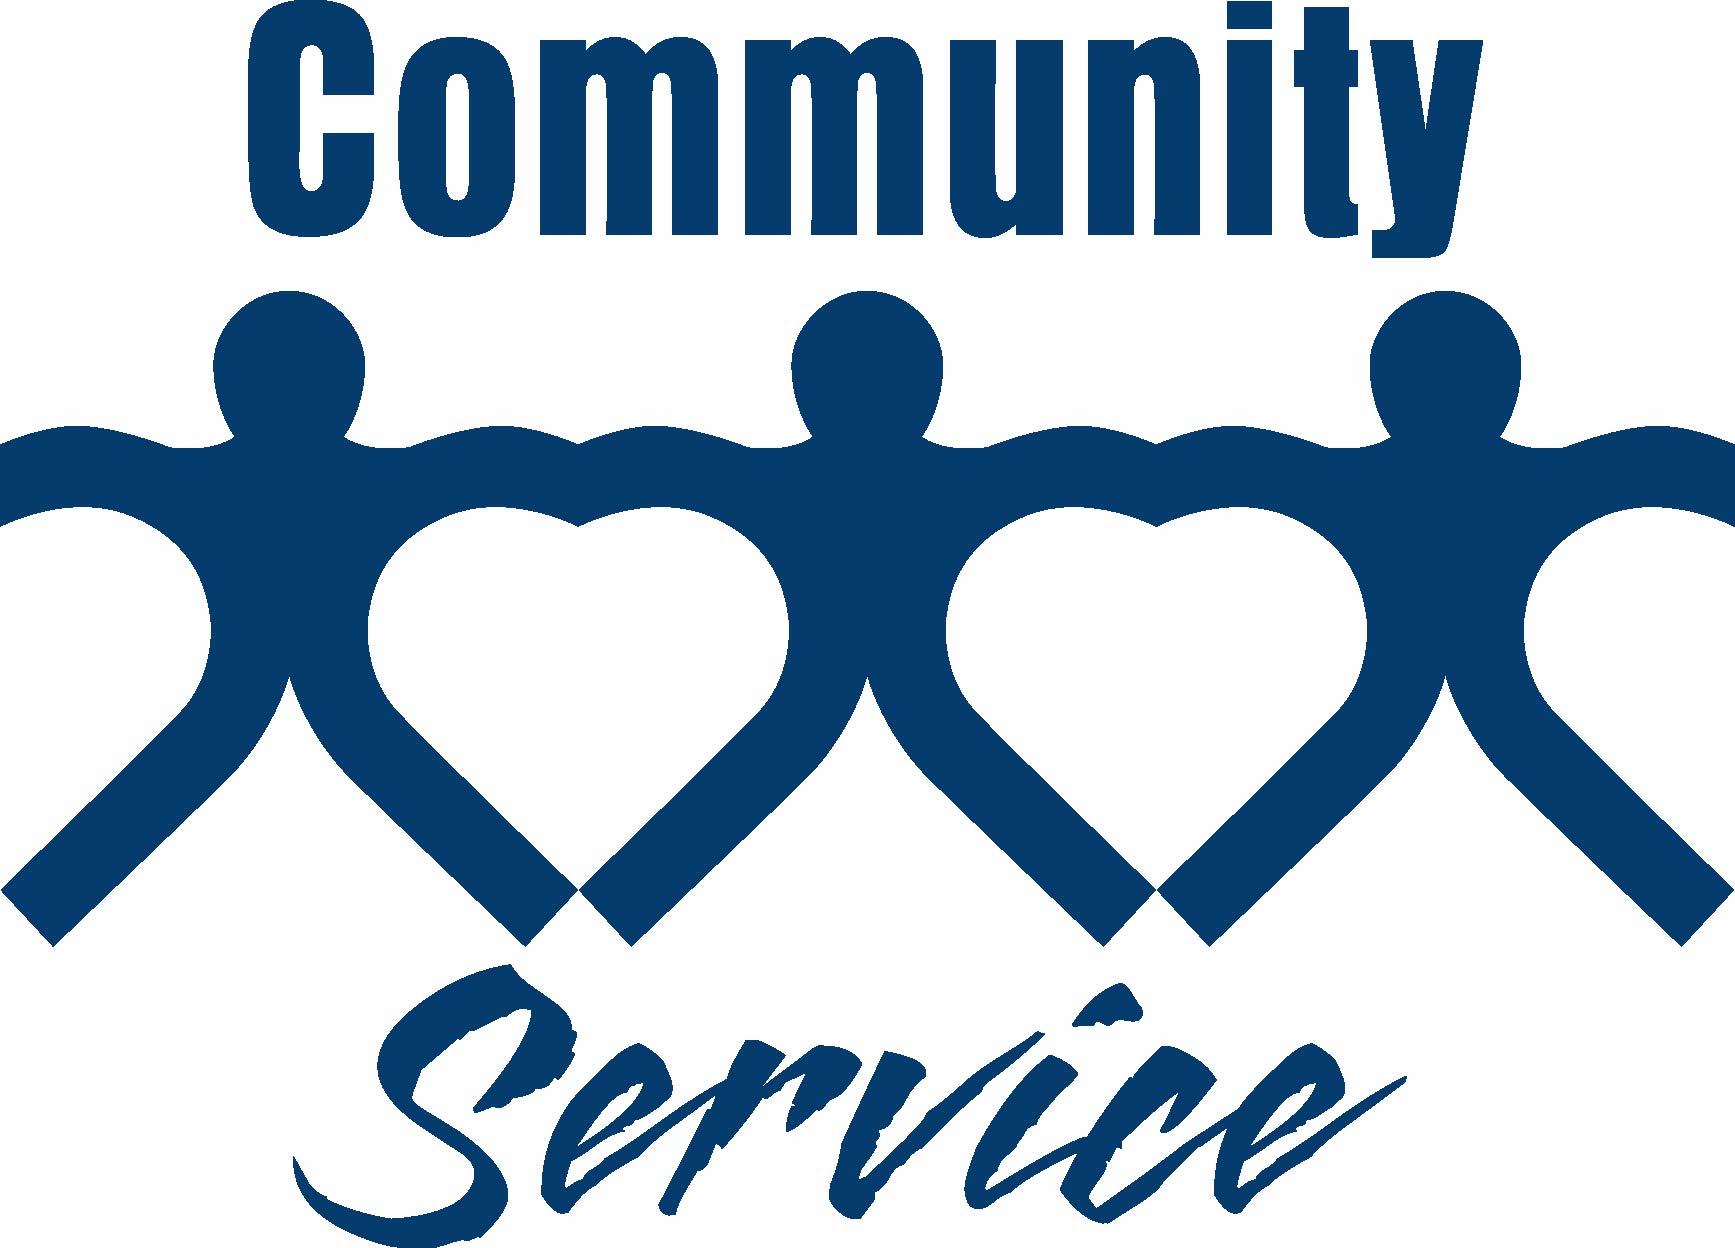 community clipart community involvement